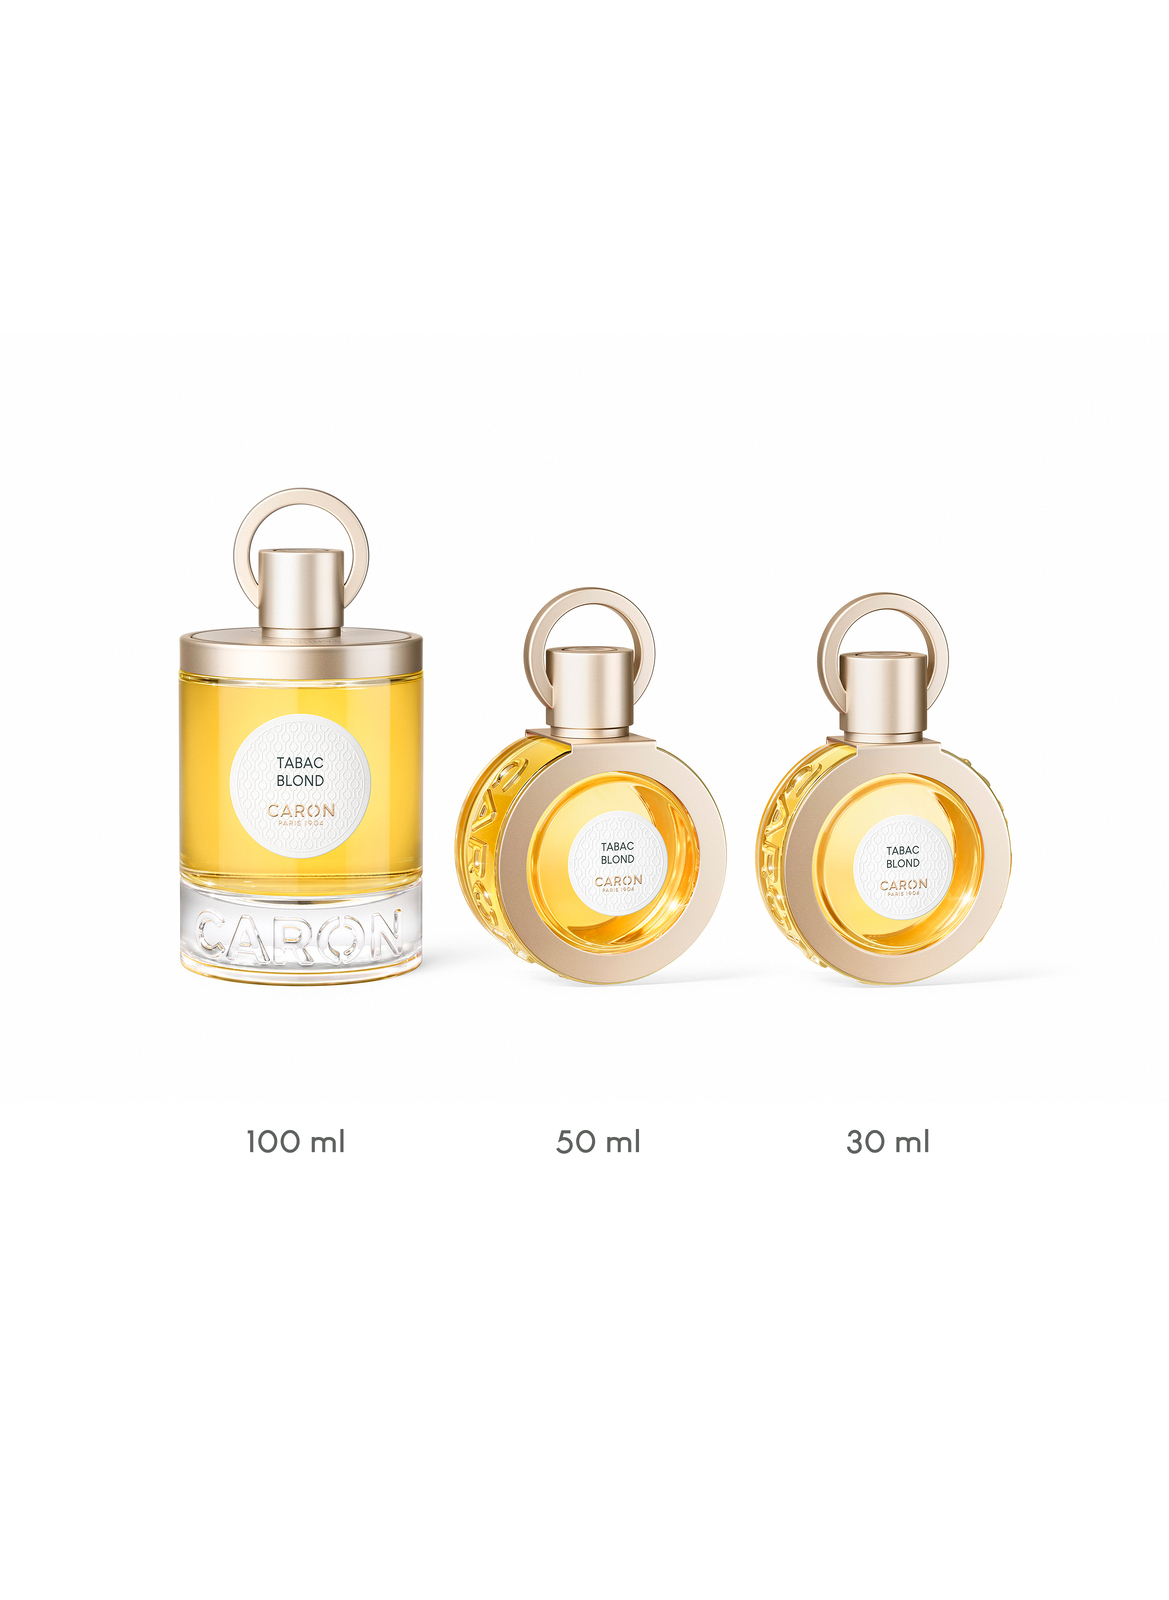 CARON Tabac Blond Perfume 30ml Refillable